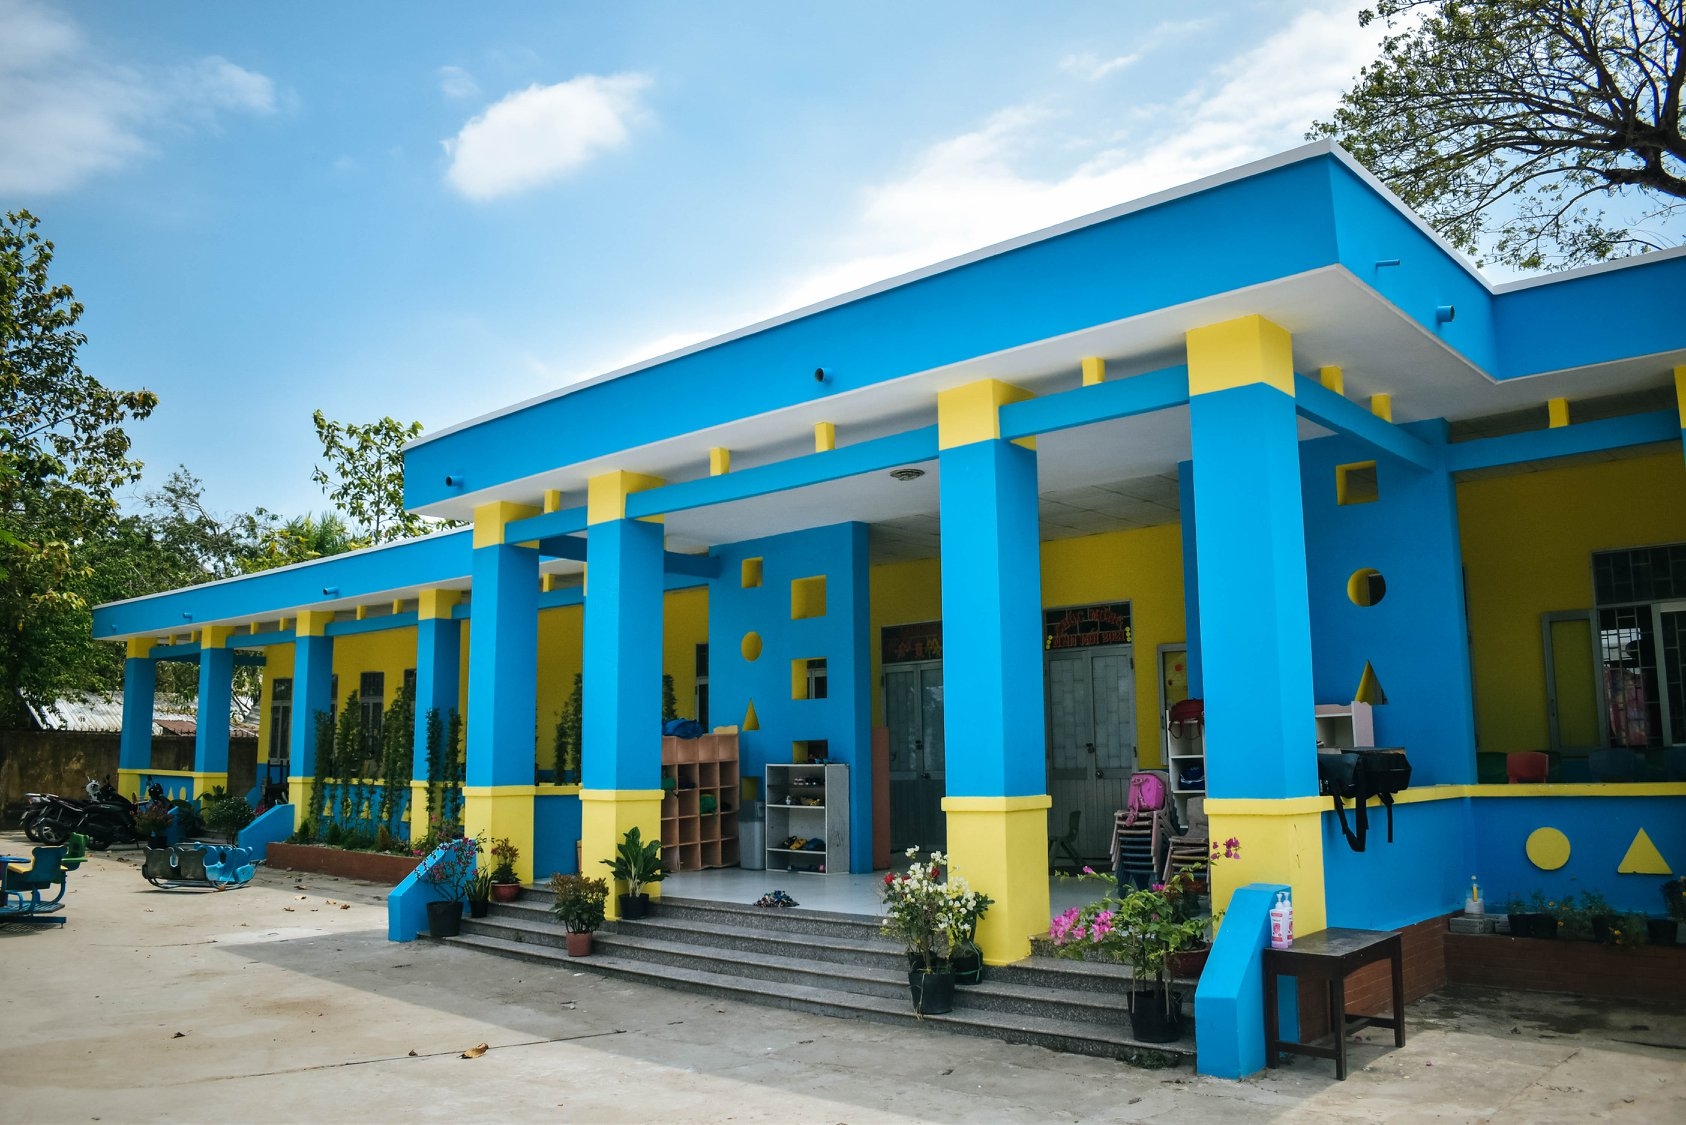 Another kindergarten built by Saigonchildren in Hau Giang